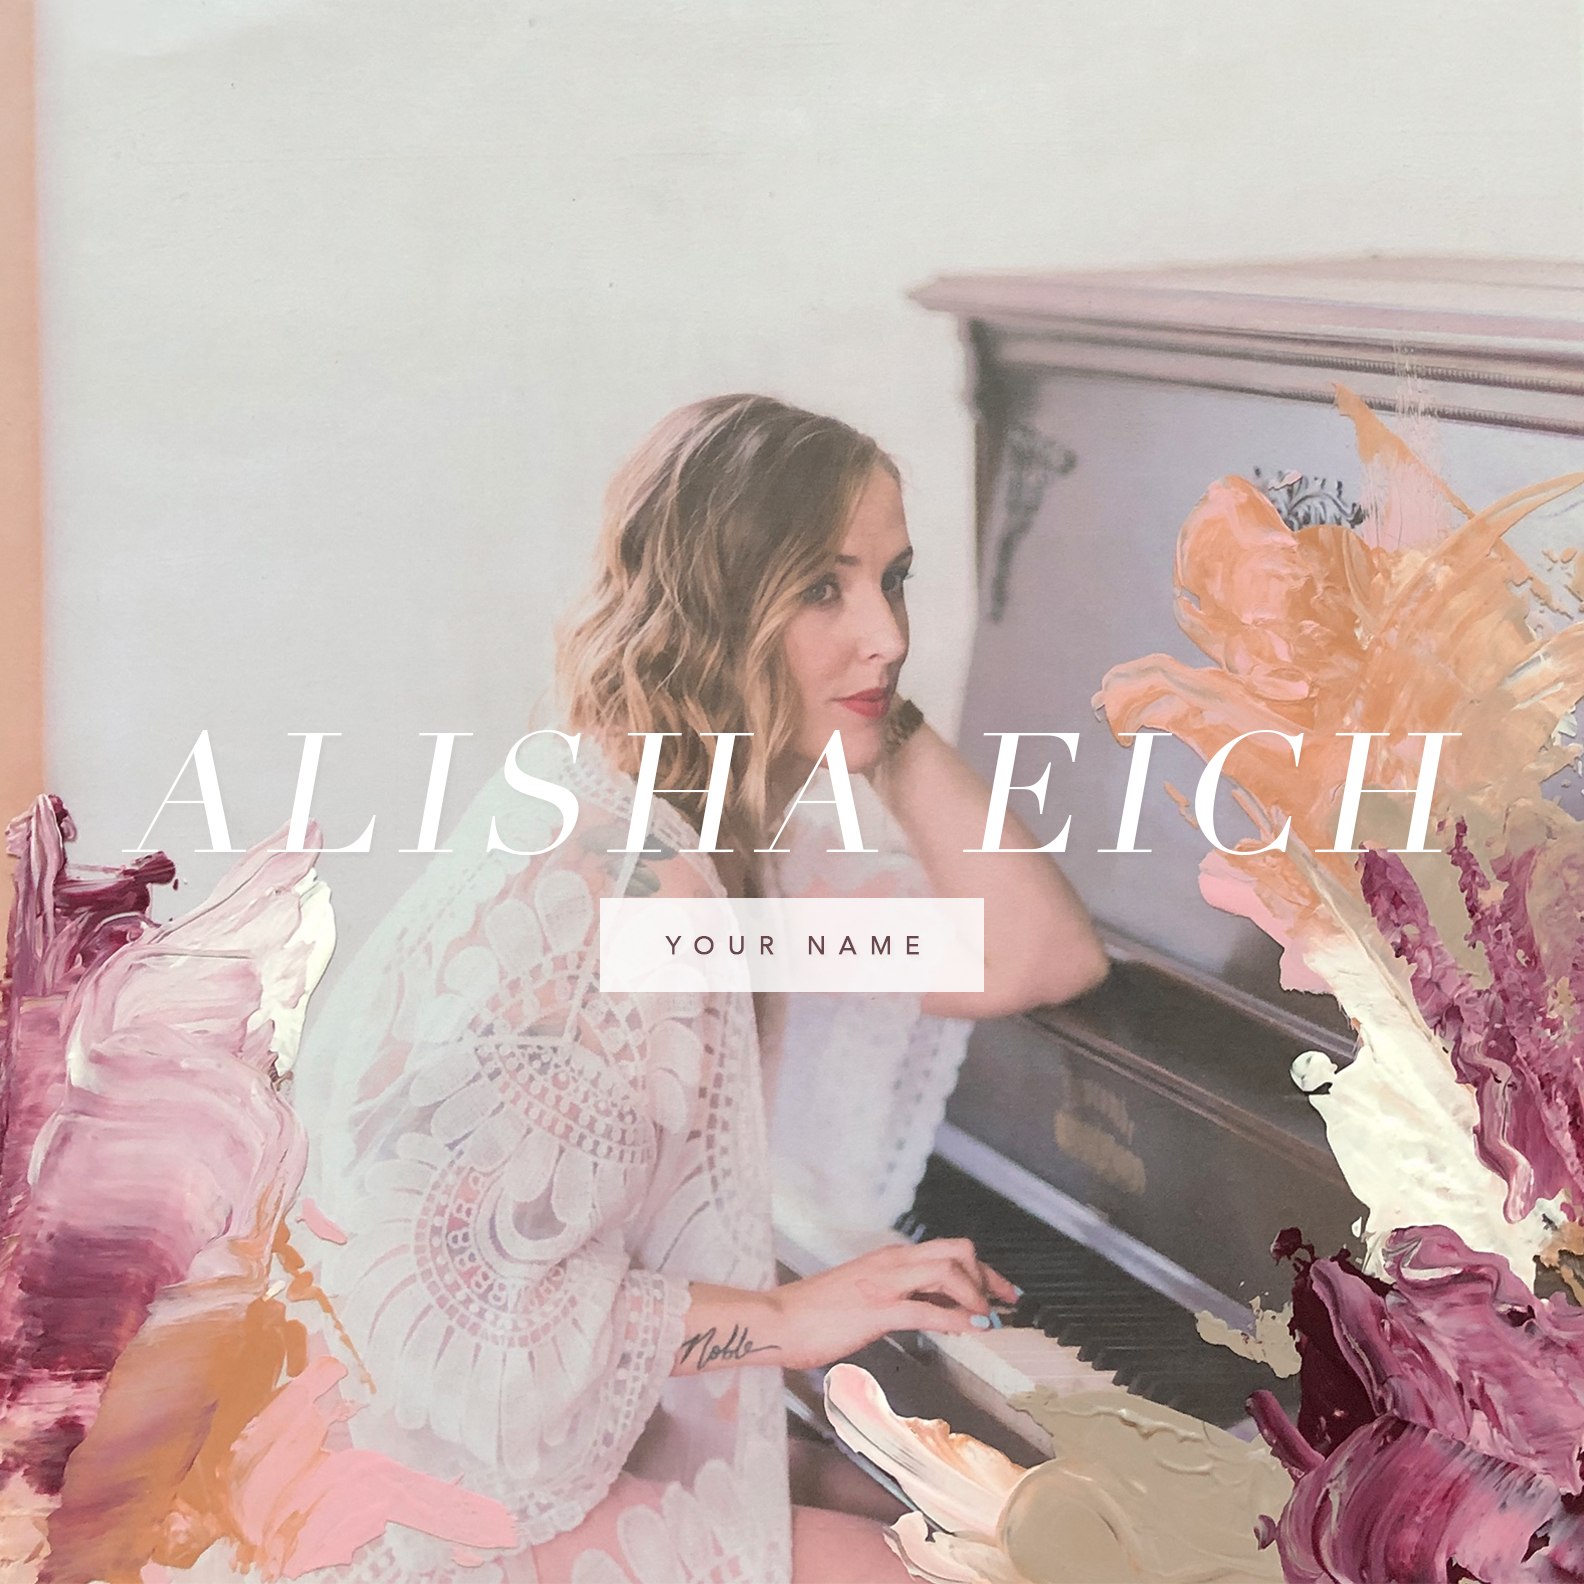 Alisha Eich - Your Name